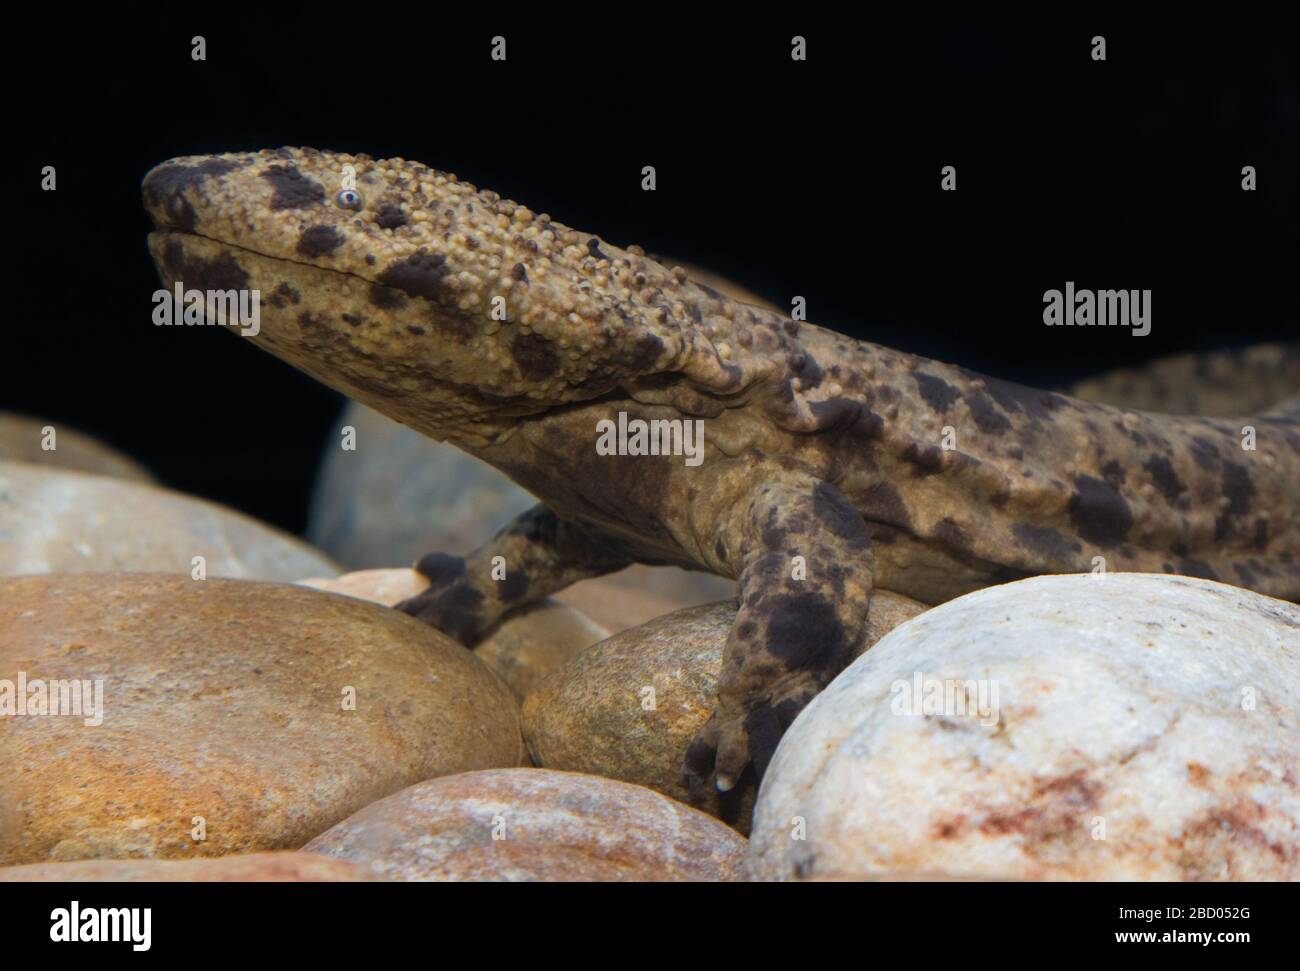 Japanese Giant Salamander. Species: japonicus,Genus: Andrias,Family: Cryptobranchidae,Order: Caudata,Class: Amphibia,Phylum: Chordata,Kingdom: Animalia,Amphibian Japanese Giant Salamander Stock Photo